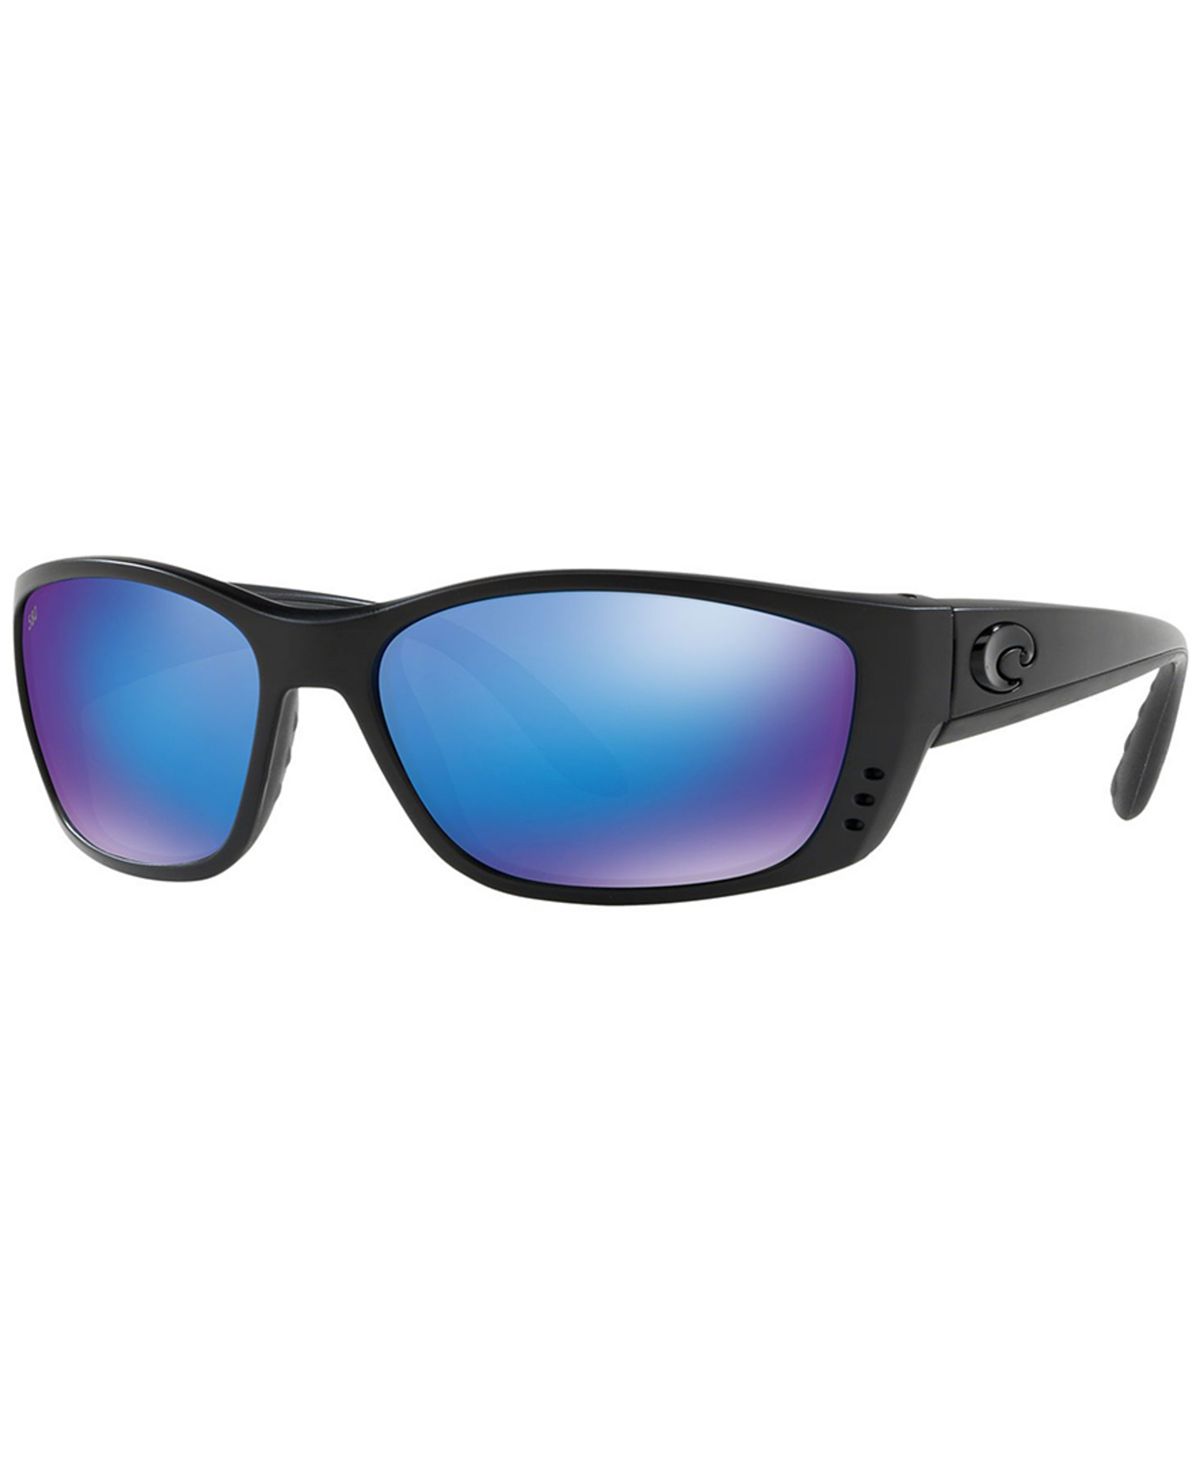 black juneau mirror lake Поляризационные солнцезащитные очки FISCH 64 Costa Del Mar